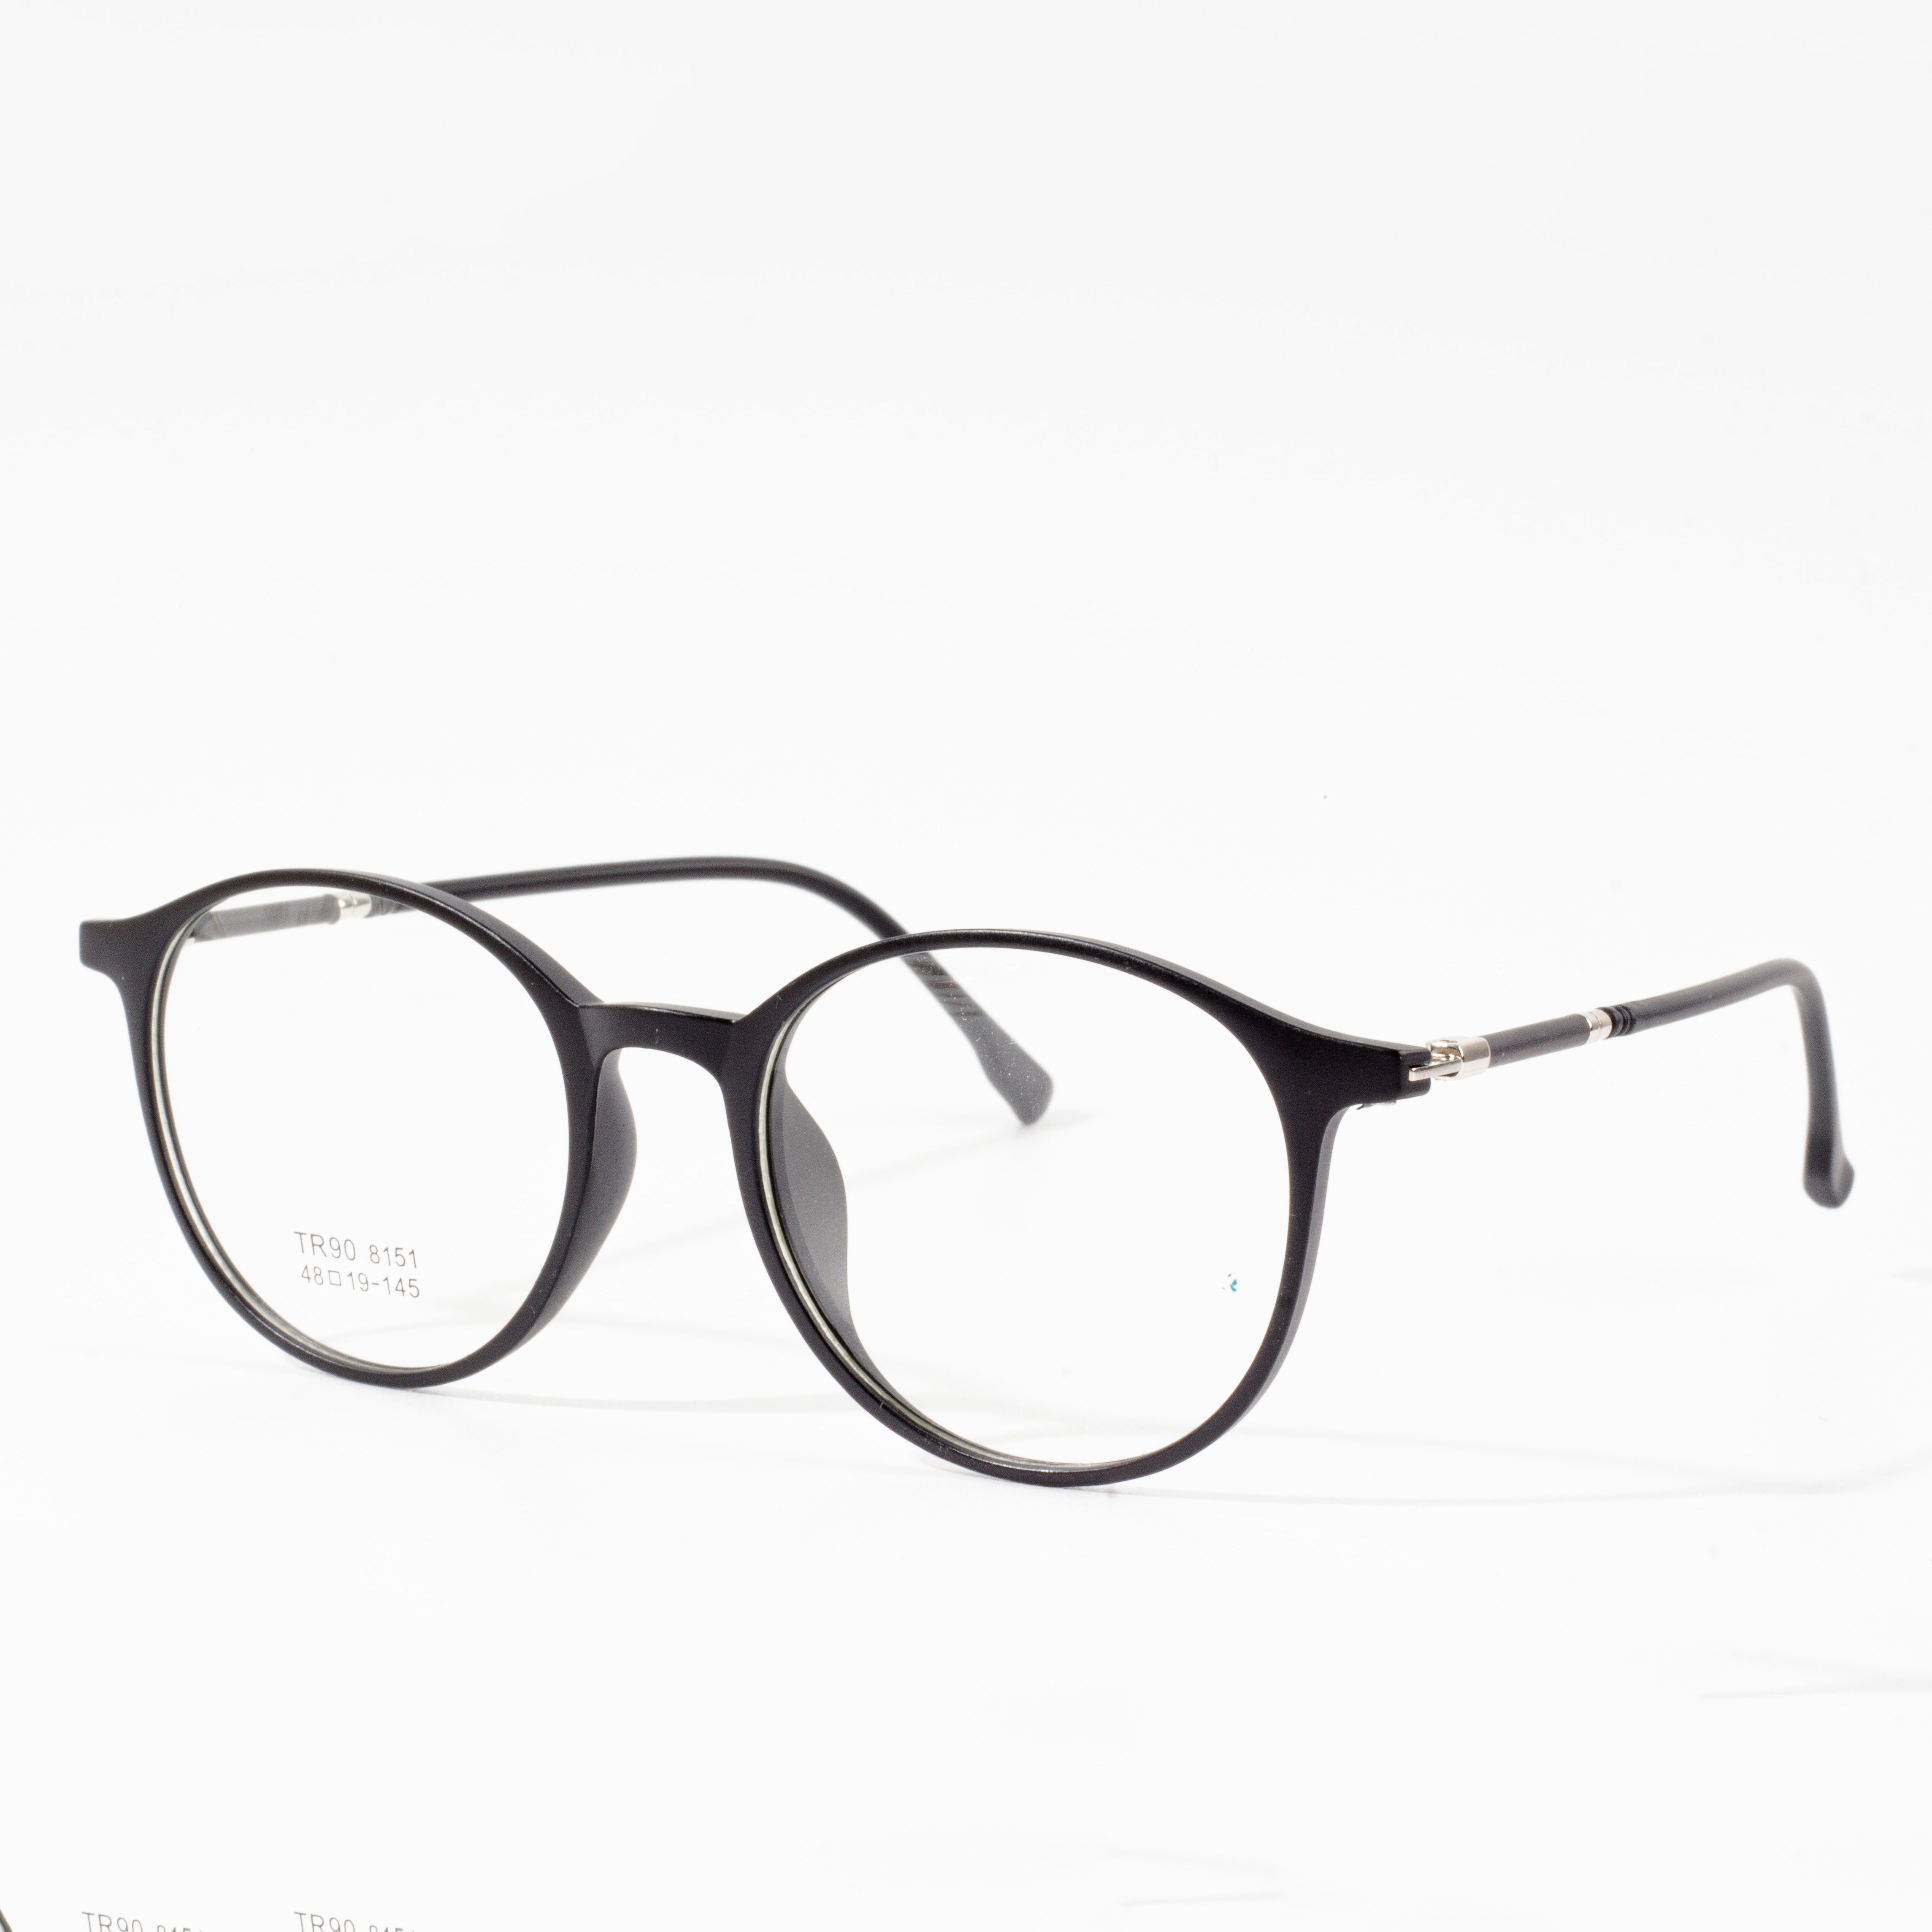 Mens & Womens Designer Frames - Eyeglasses.com 广告· https://www.eyeglasses.com/ (888) 896-3885 Shop Designer Frames From Top Global Eyeglass Brands for half Off ລາຄາຂາຍຍ່ອຍໃນມື້ນີ້.